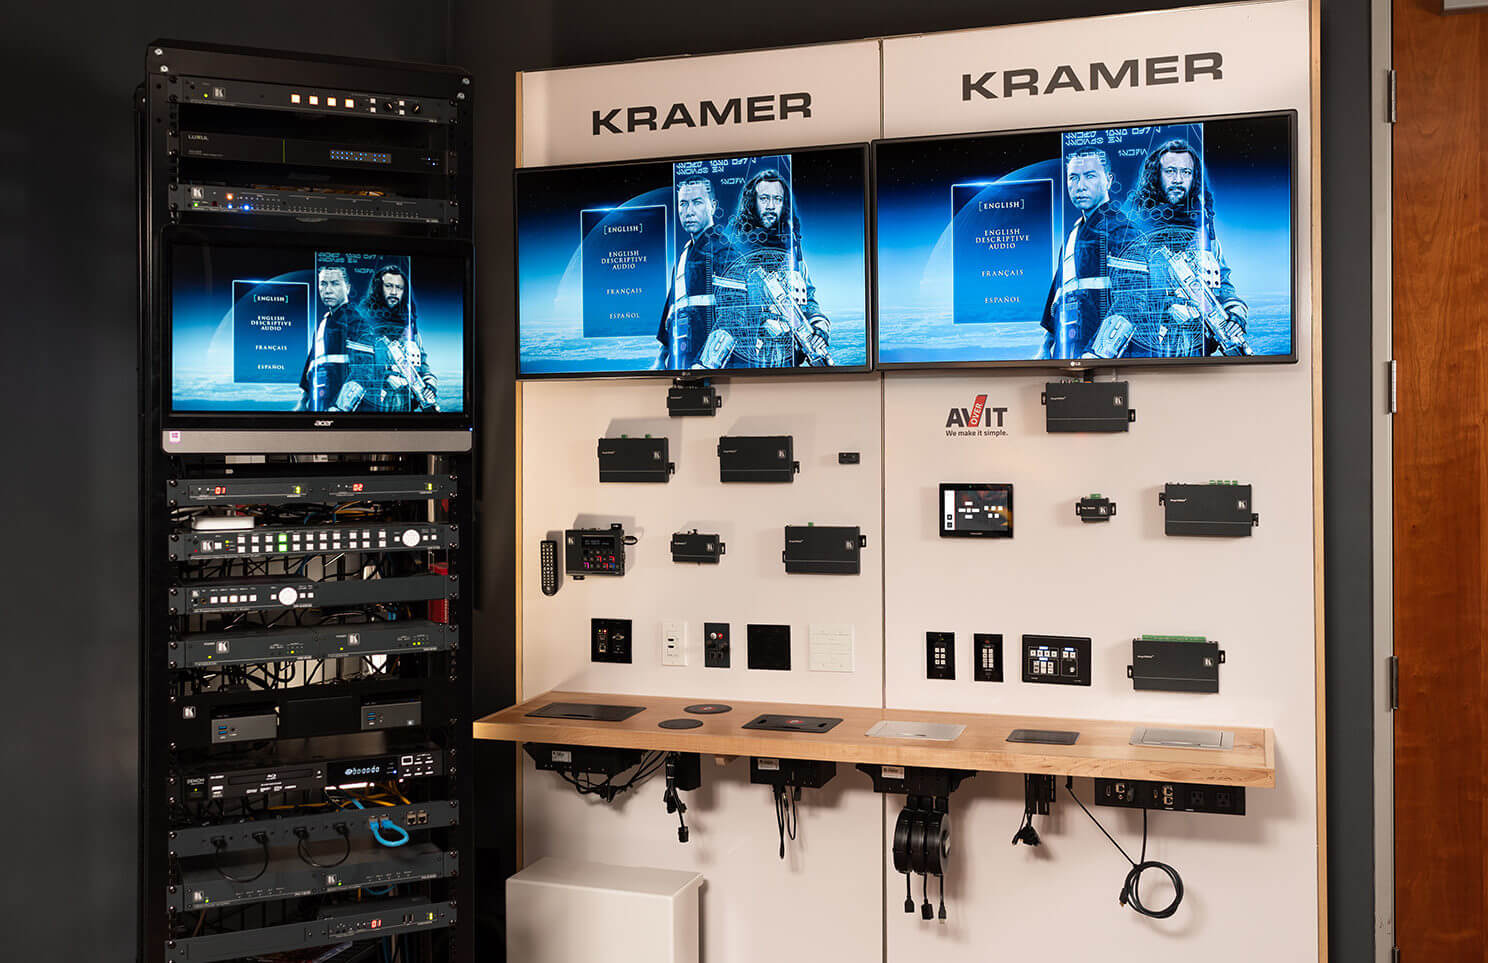 Kramer Control systems